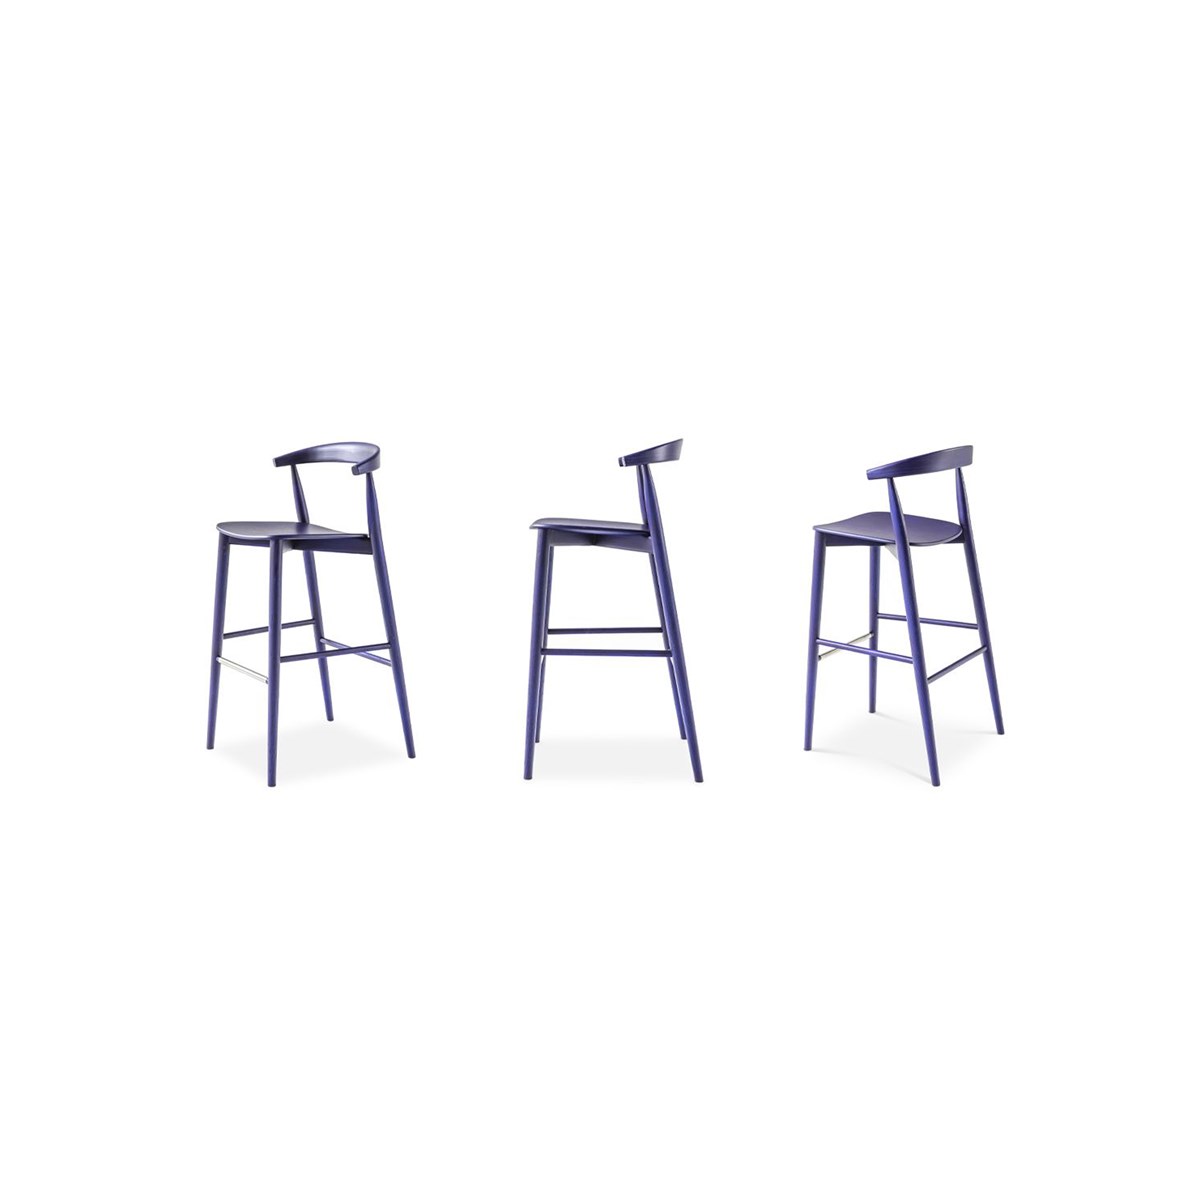 Newood Chairs11